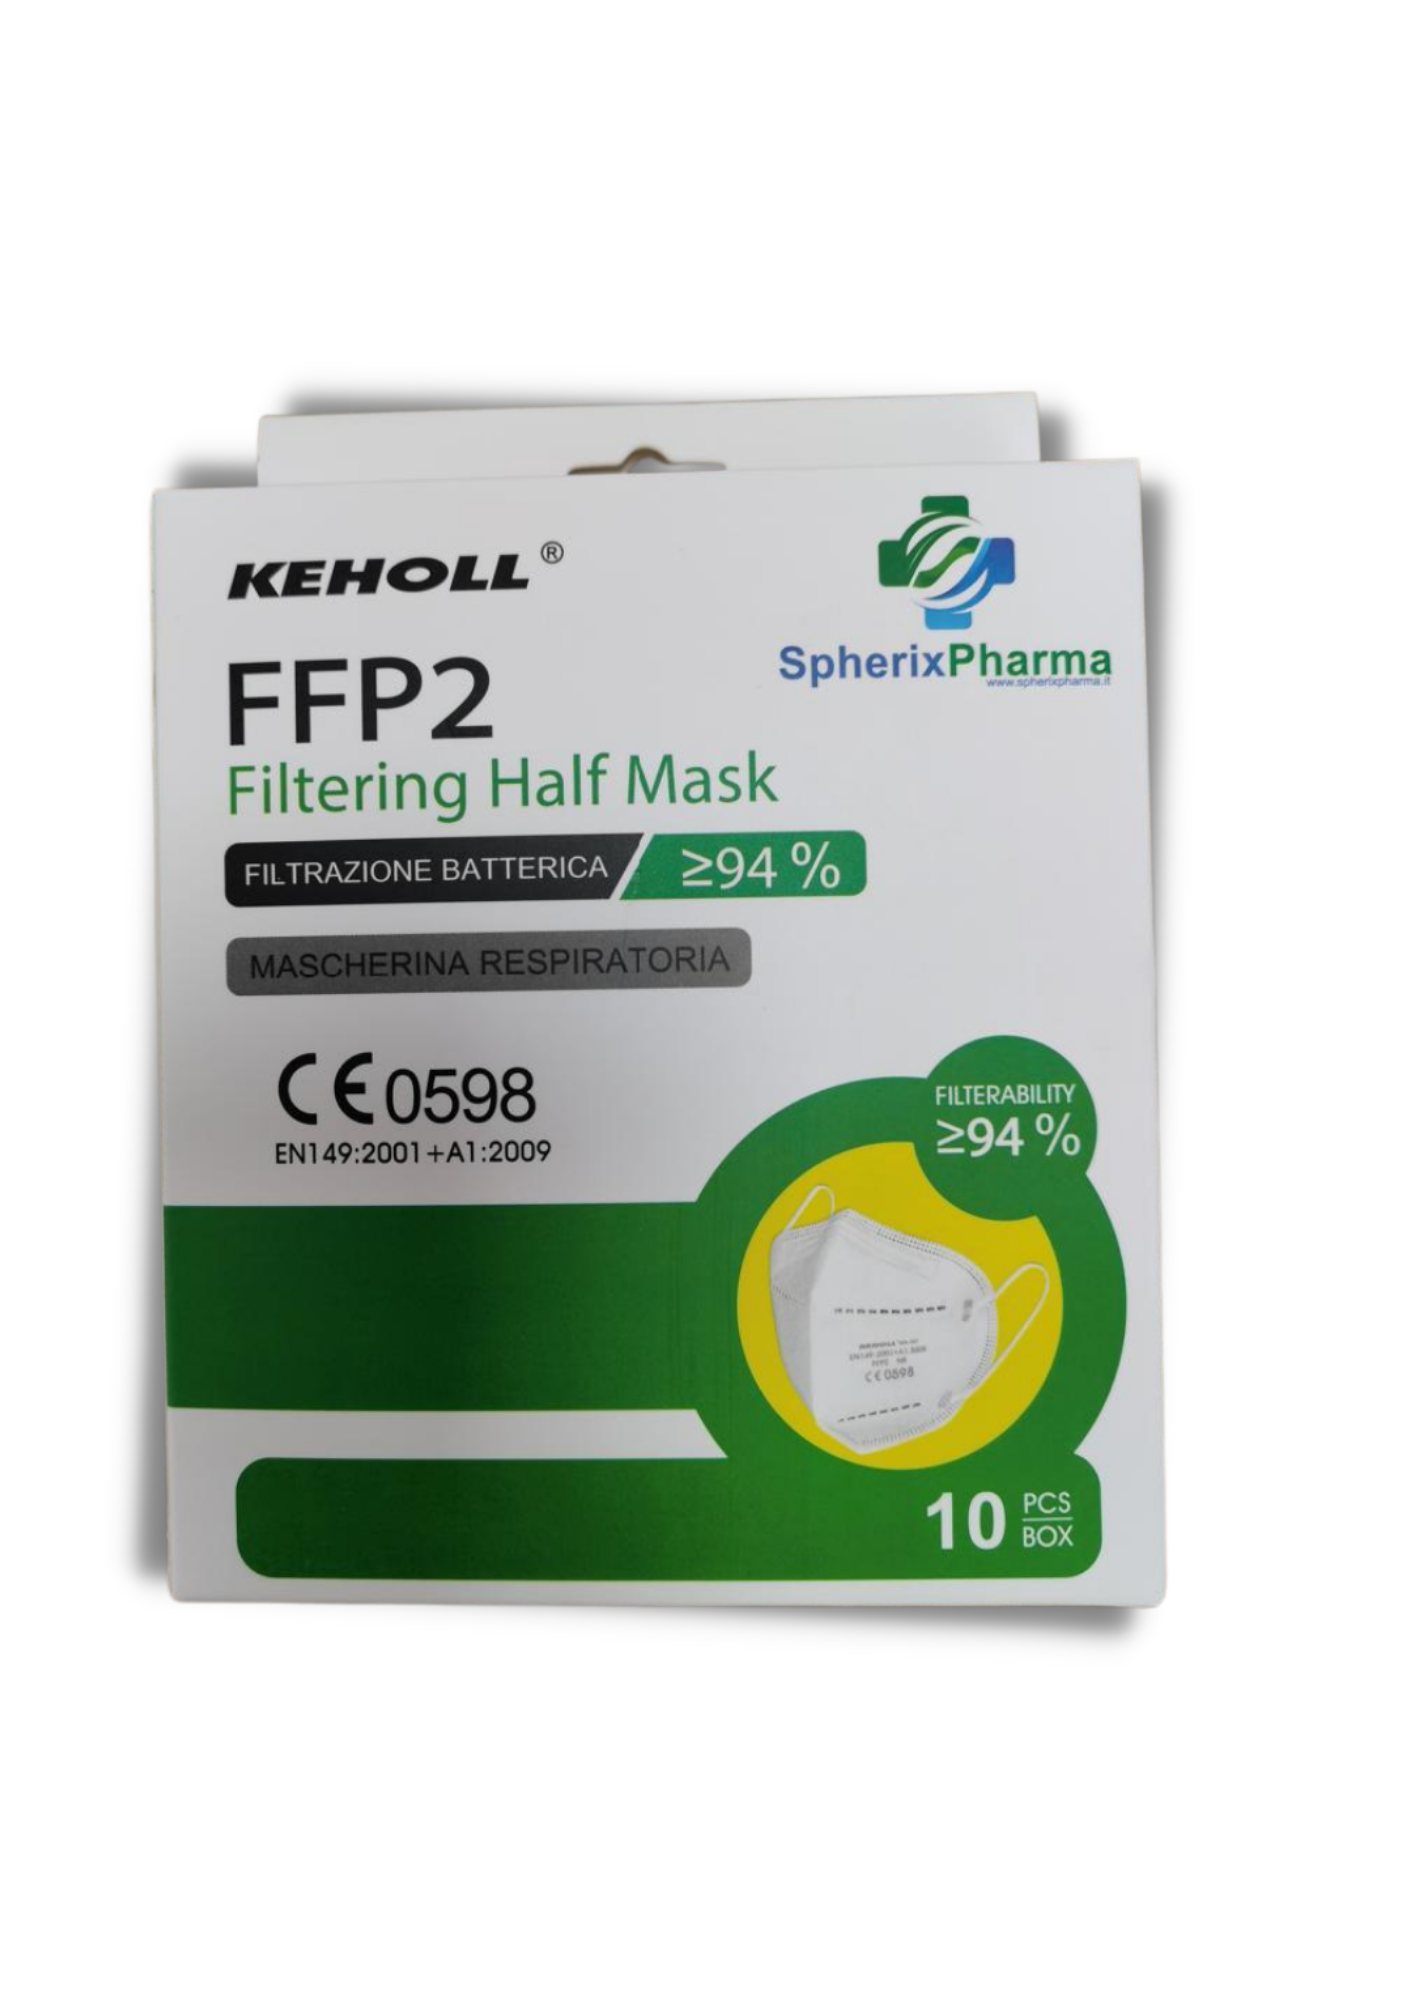 Keholl mascherine Fpp2 bianca CE 0598